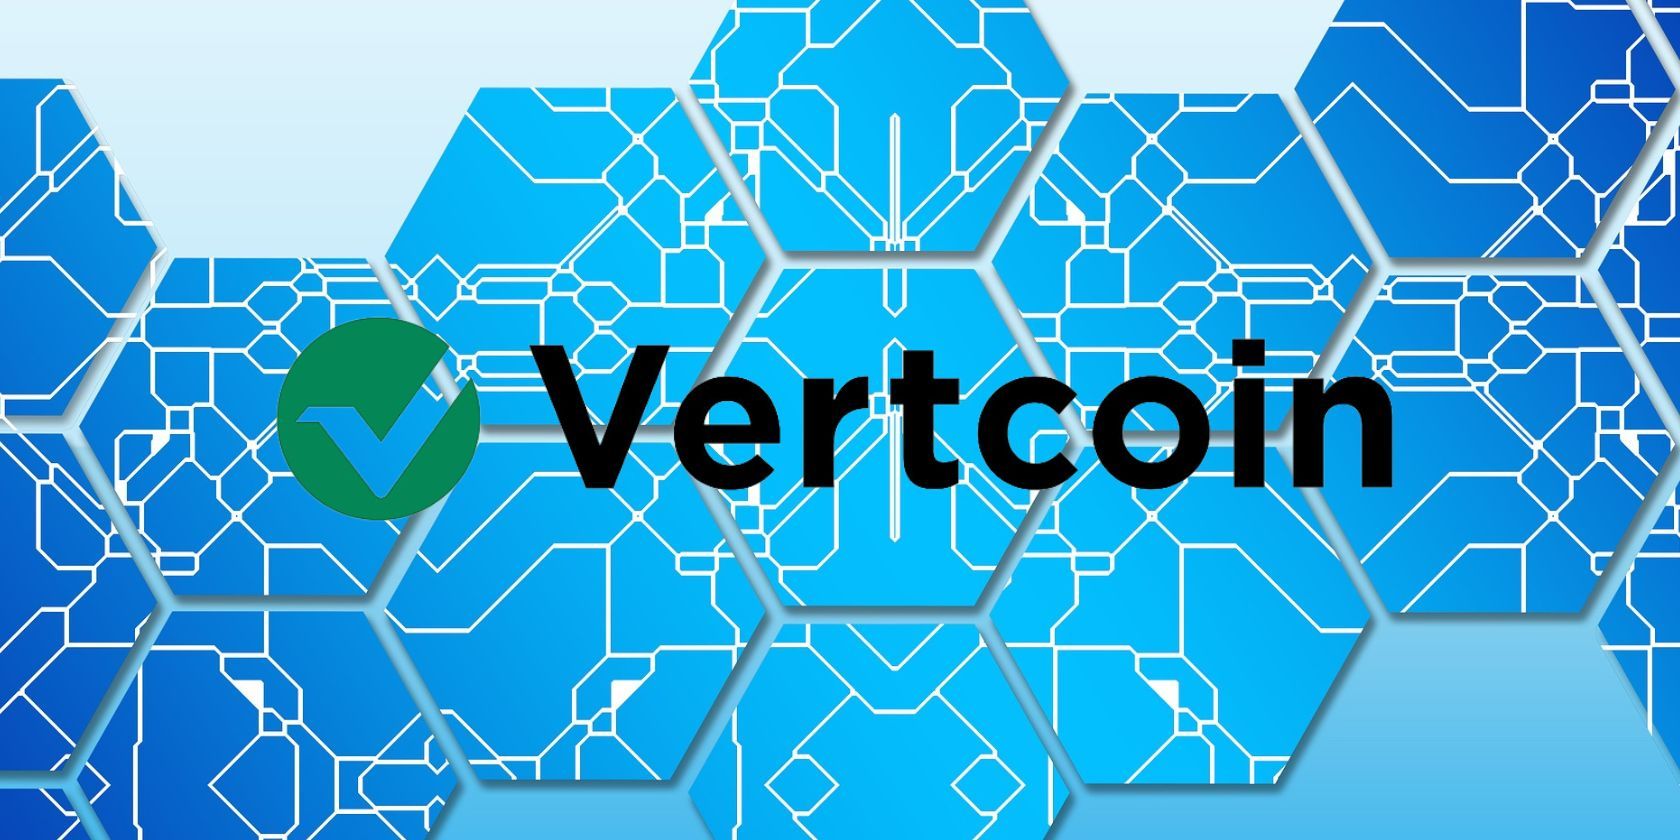 vertcoin logo in front of blue digital grid